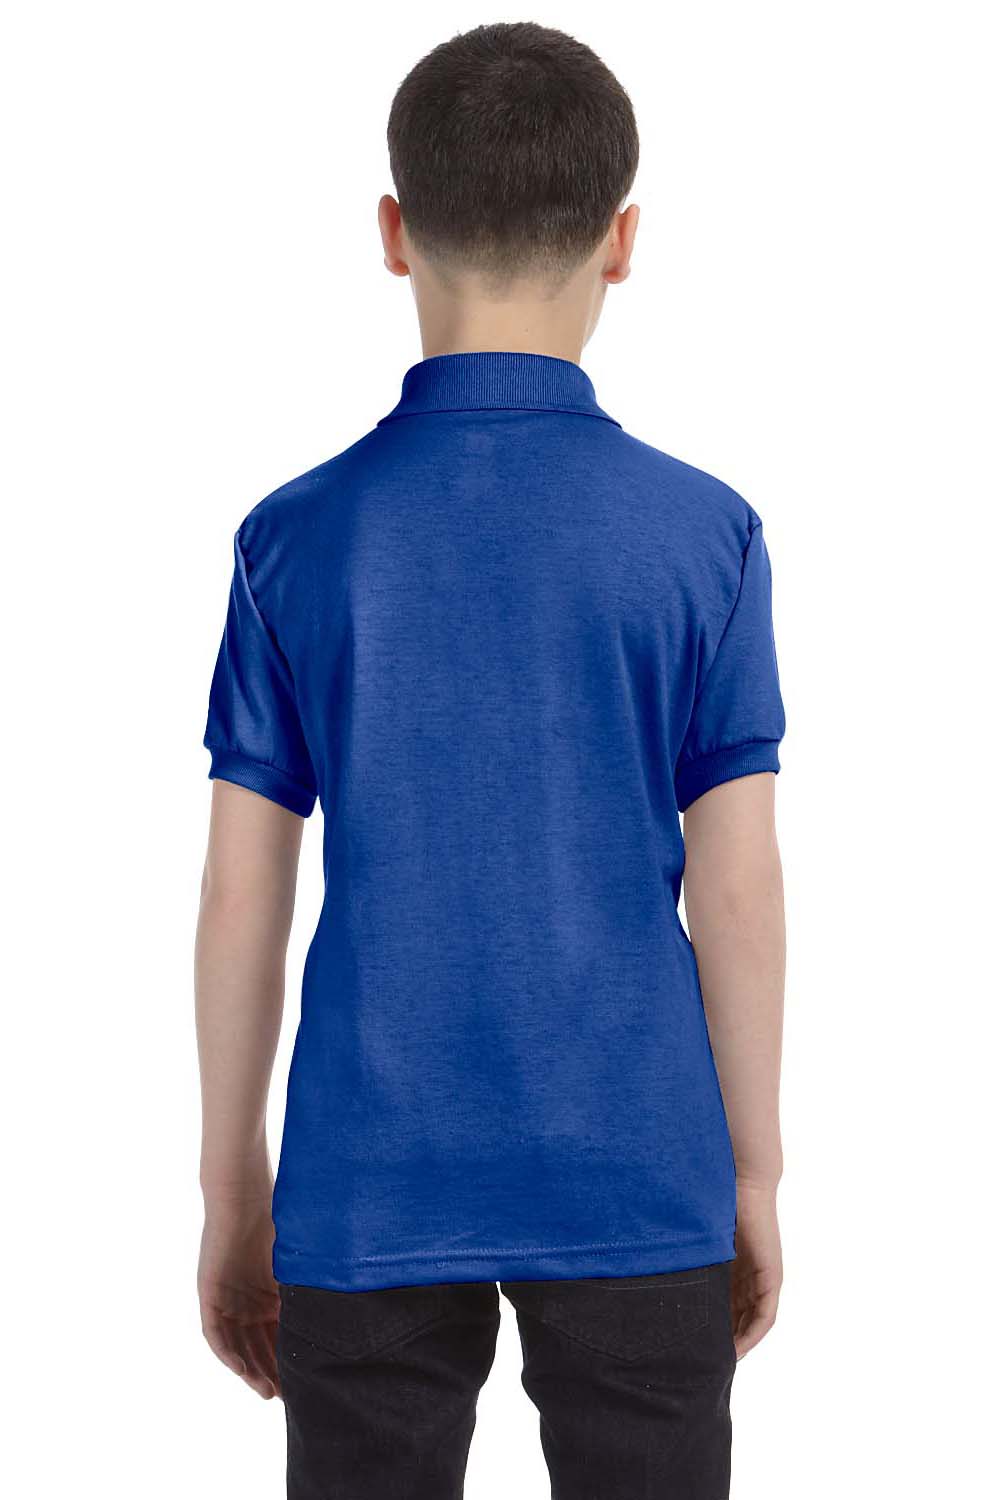 Hanes 054Y Youth EcoSmart Short Sleeve Polo Shirt Royal Blue Back